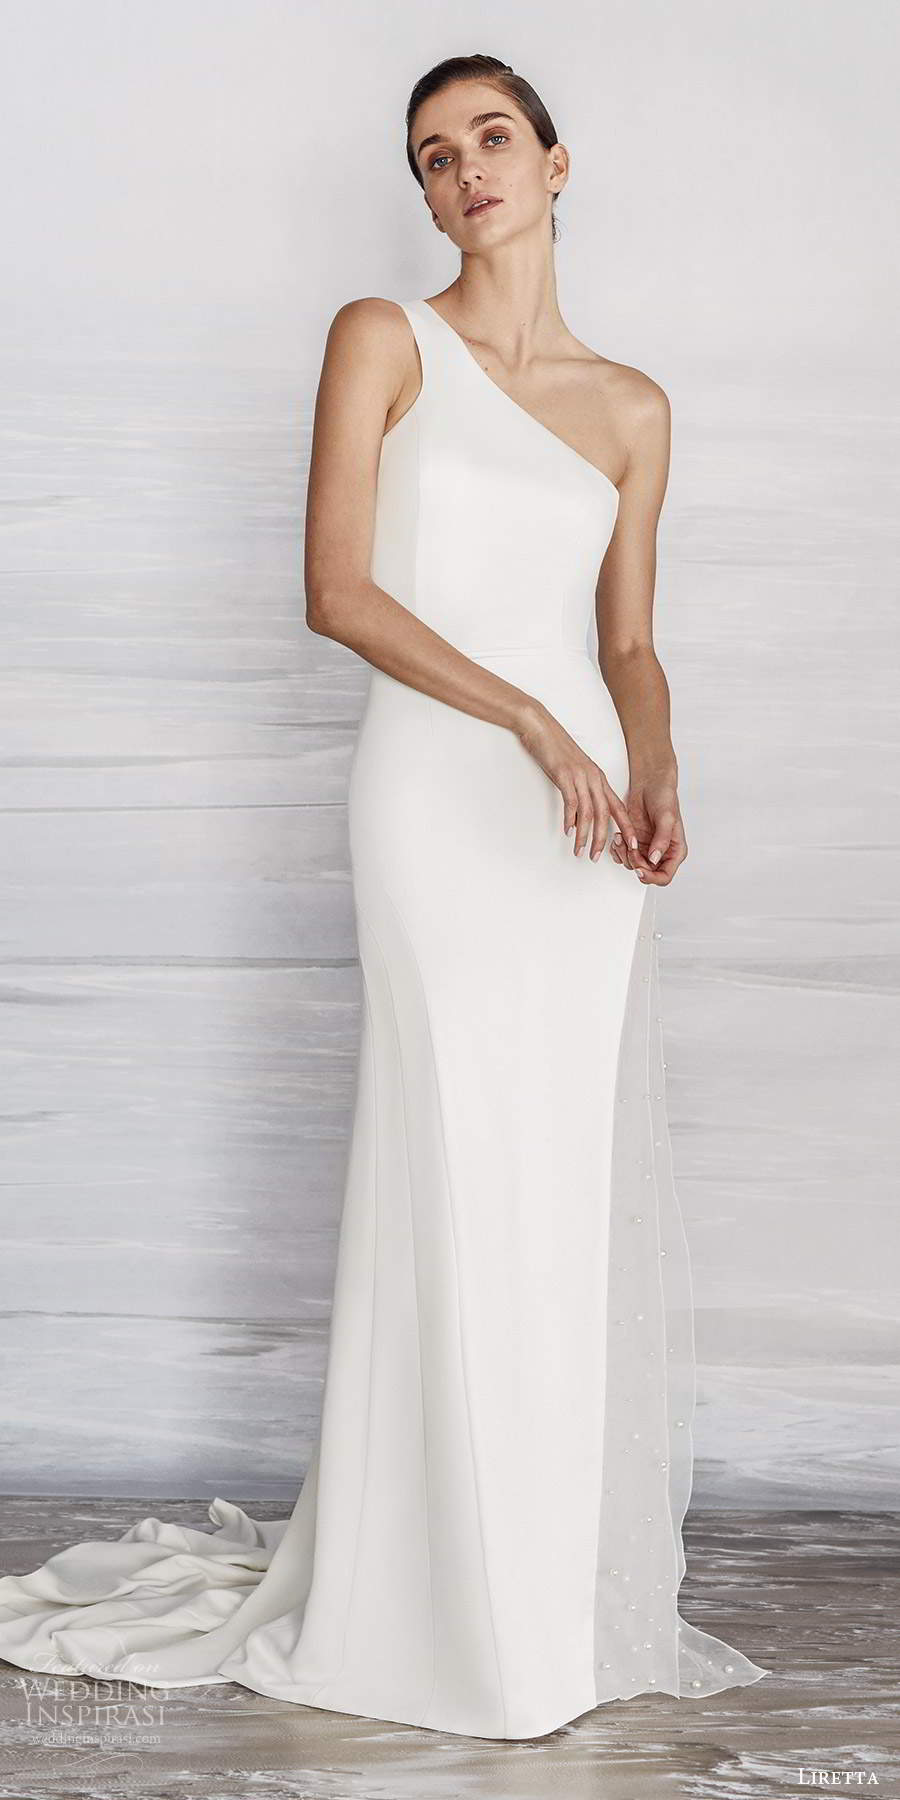 liretta 2021 bridal sleeveless one shoulder strap clean minimalist sheath wedding dress slit skirt sweep train (13) mv